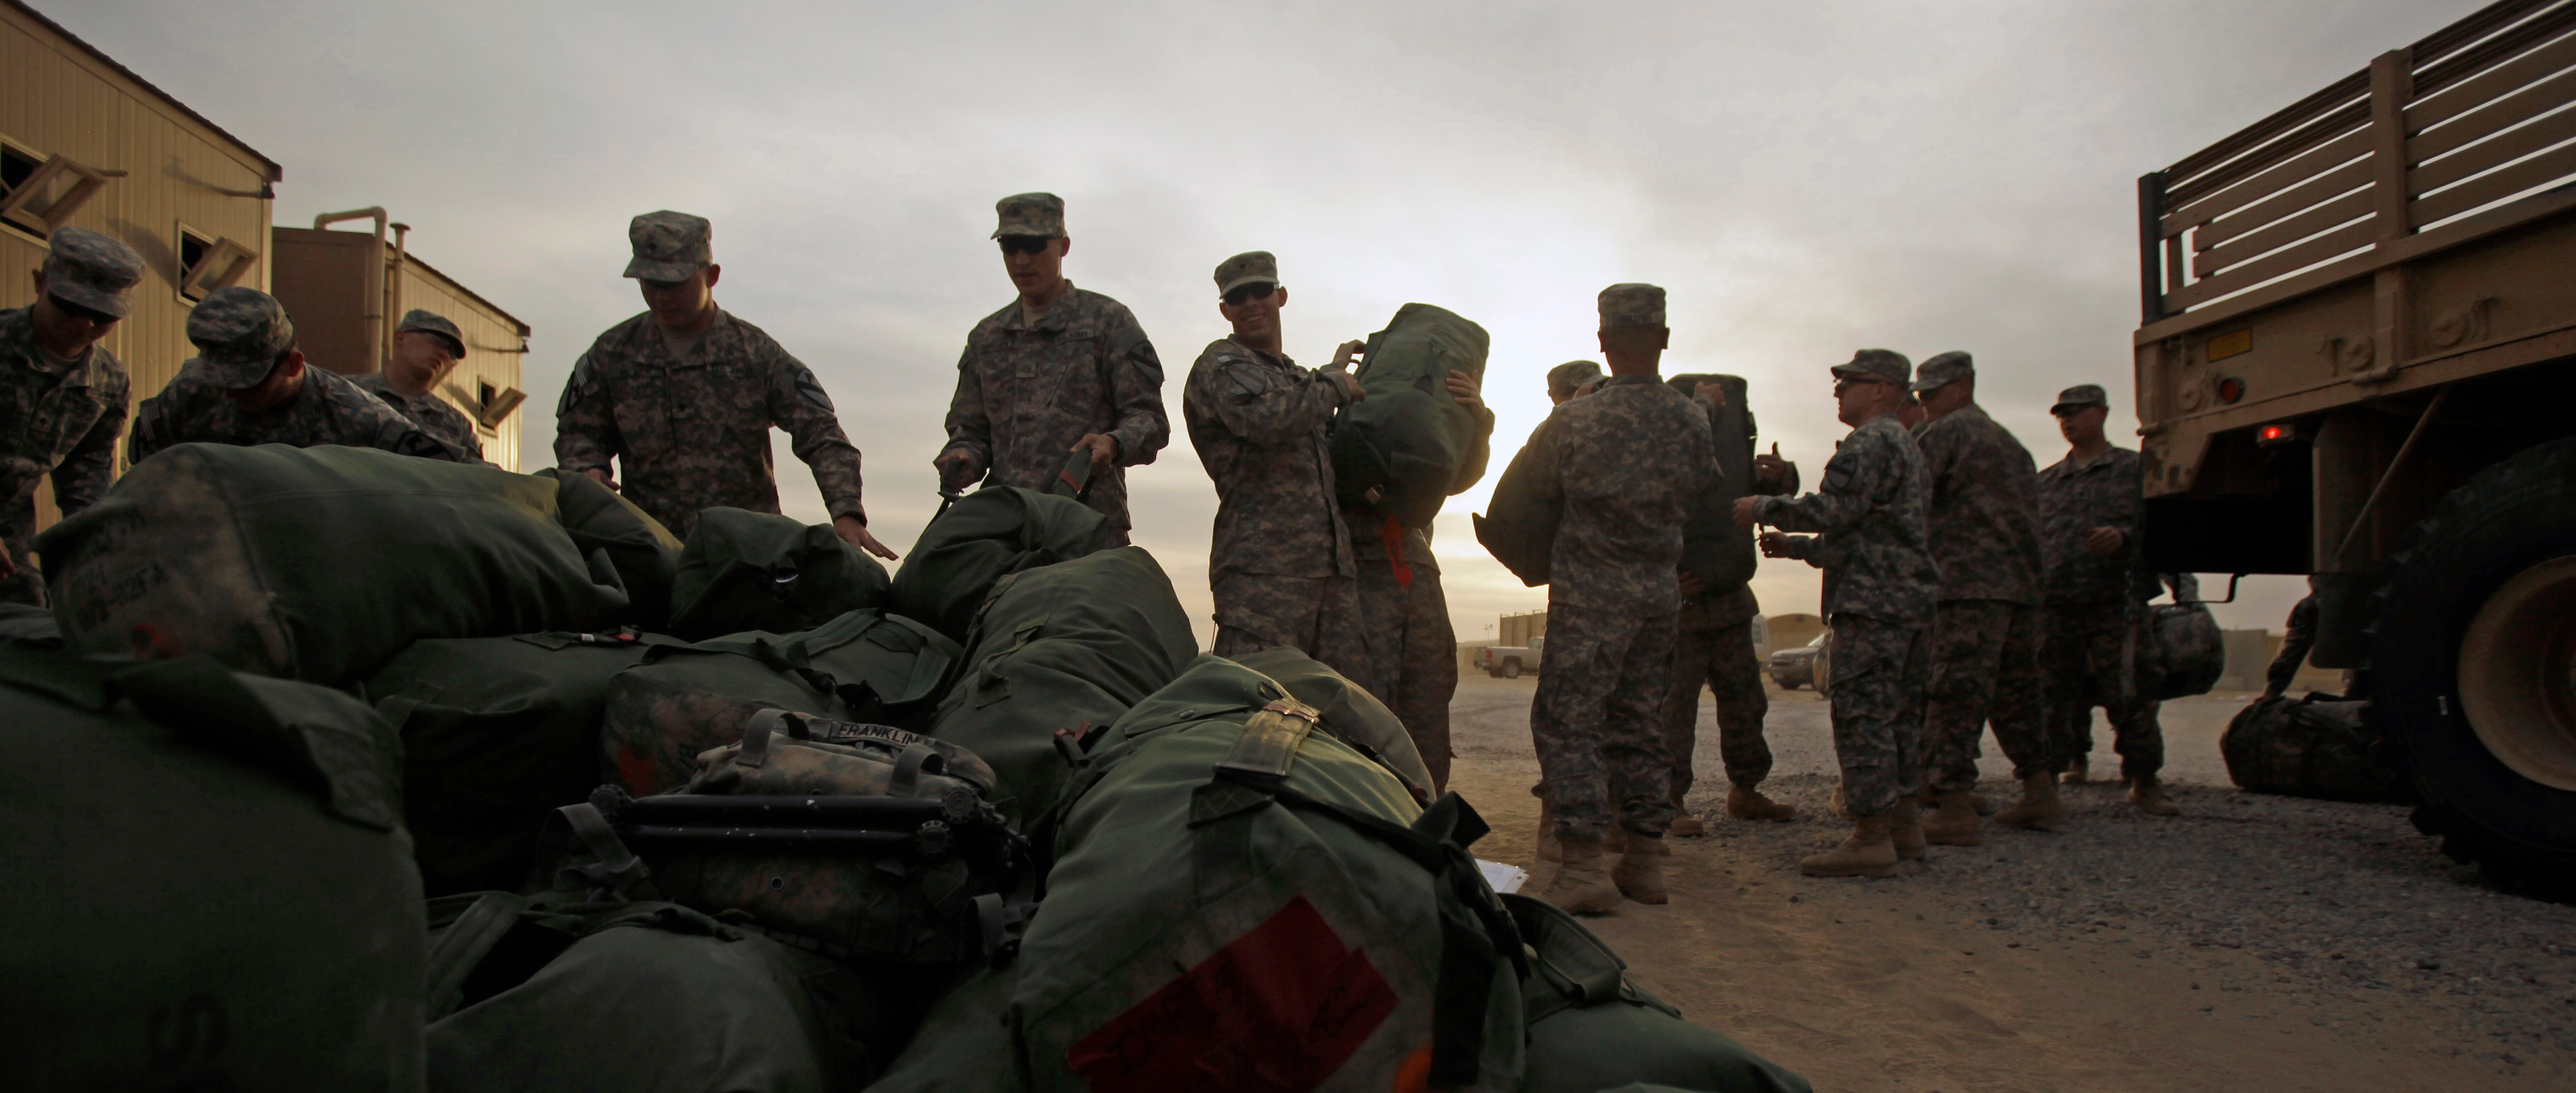 Senate advances bill to repeal decades-old Iraq war authorizations